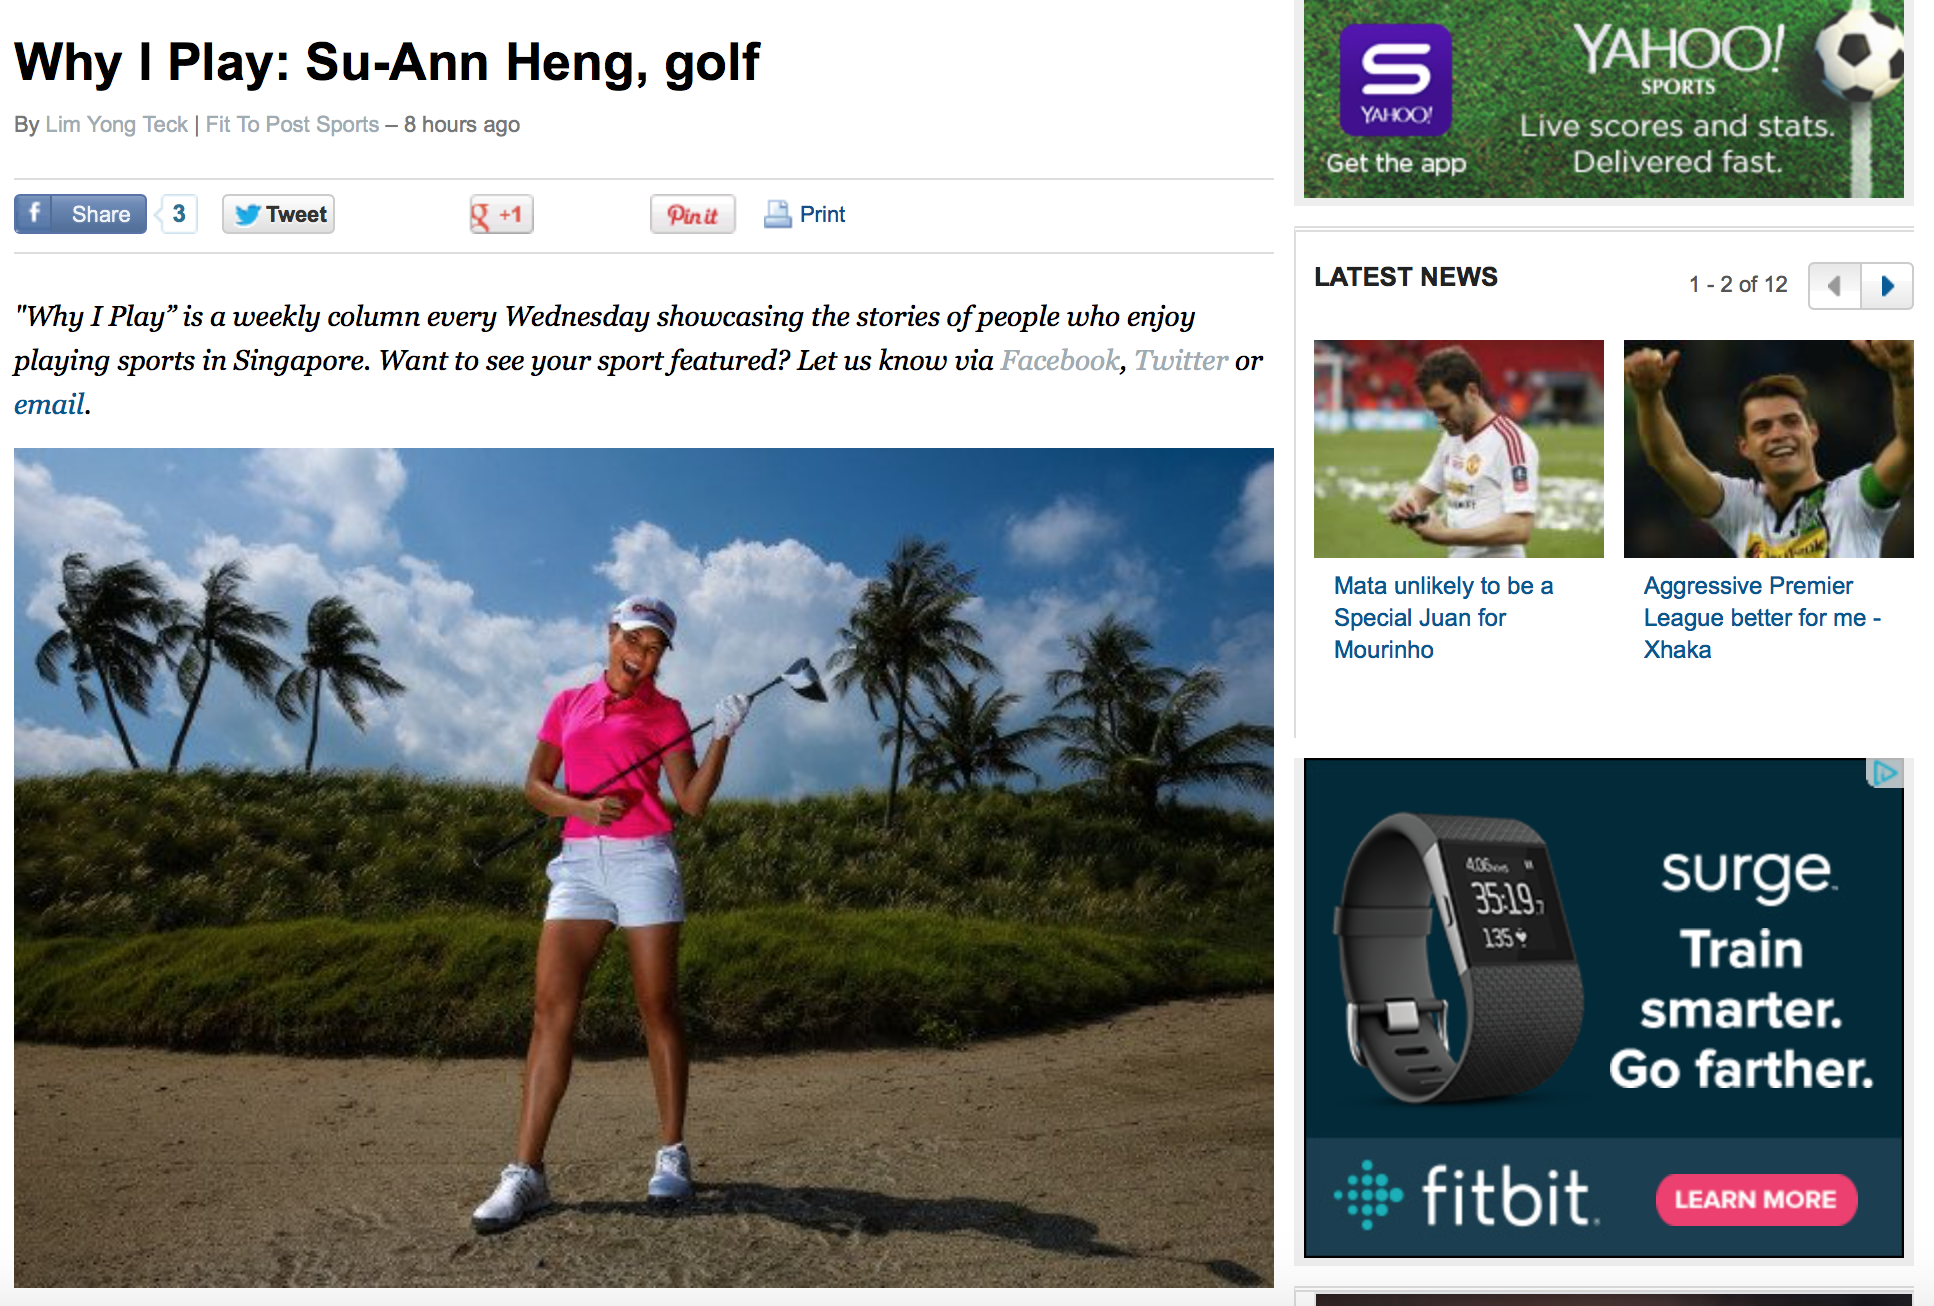  Su-Ann Heng feature for Yahoo! (www.yahoo.com) 